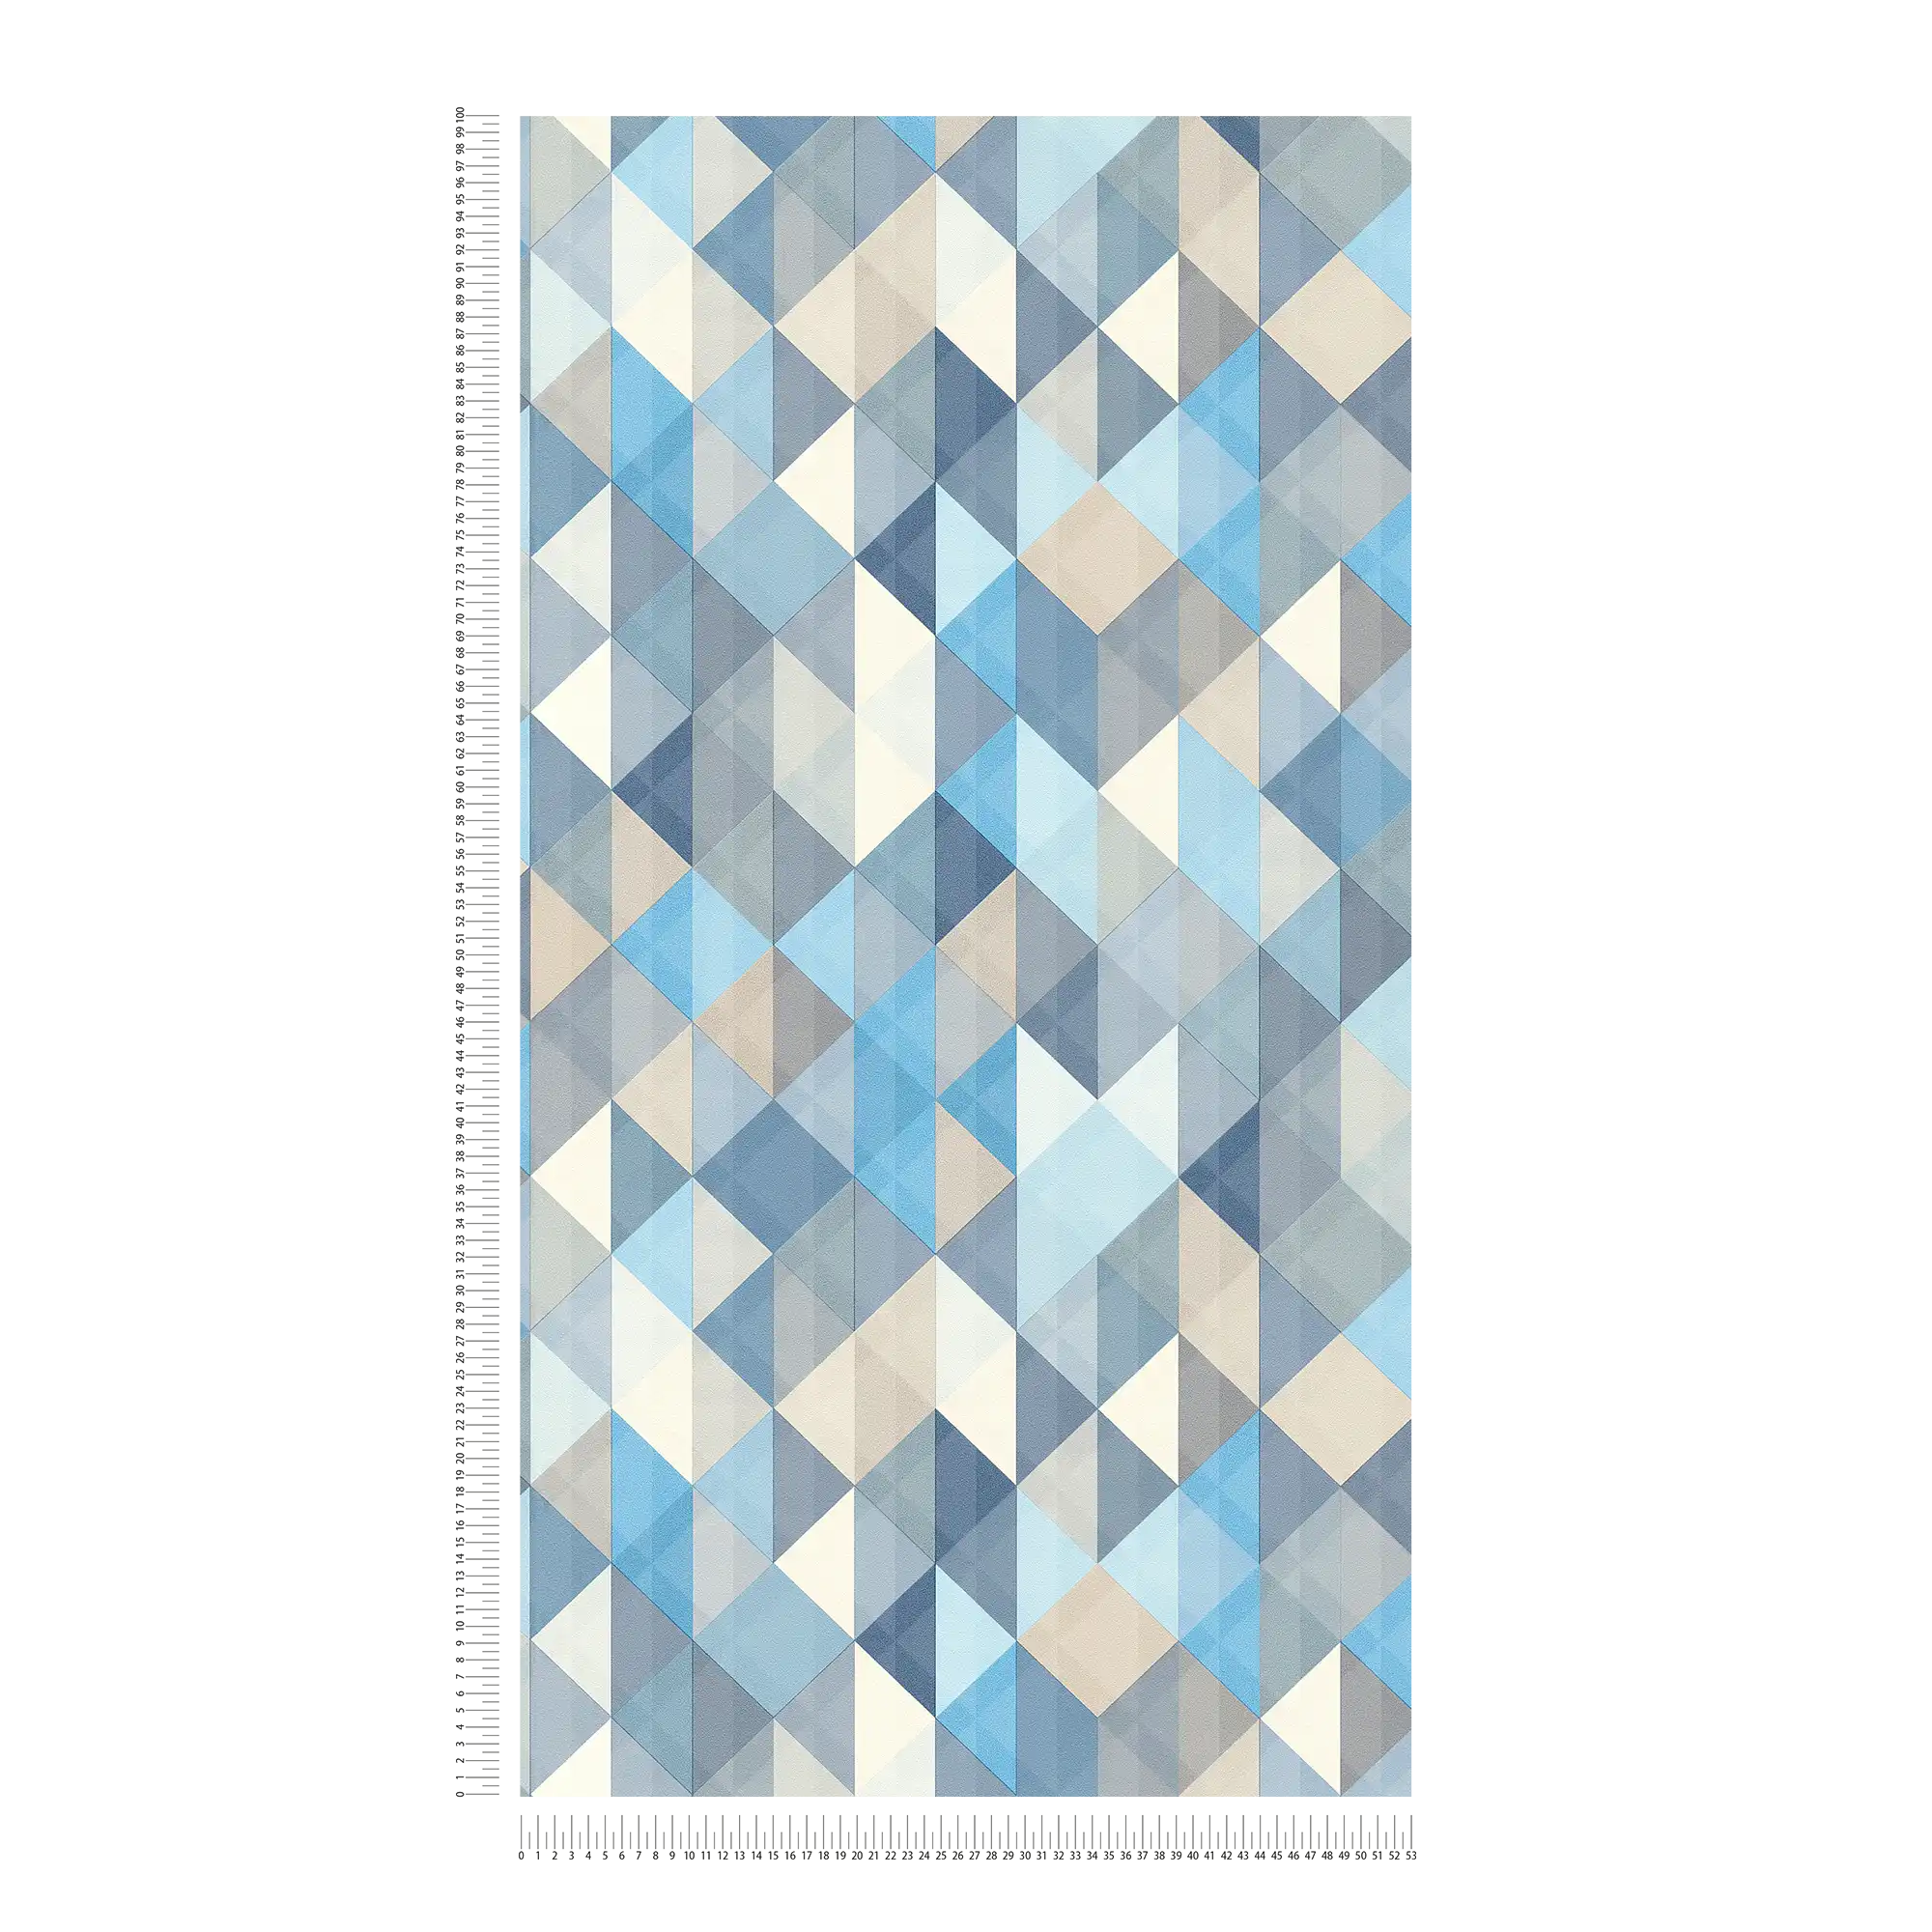             Carta da parati in stile scandinavo con motivi geometrici - blu, grigio, beige
        